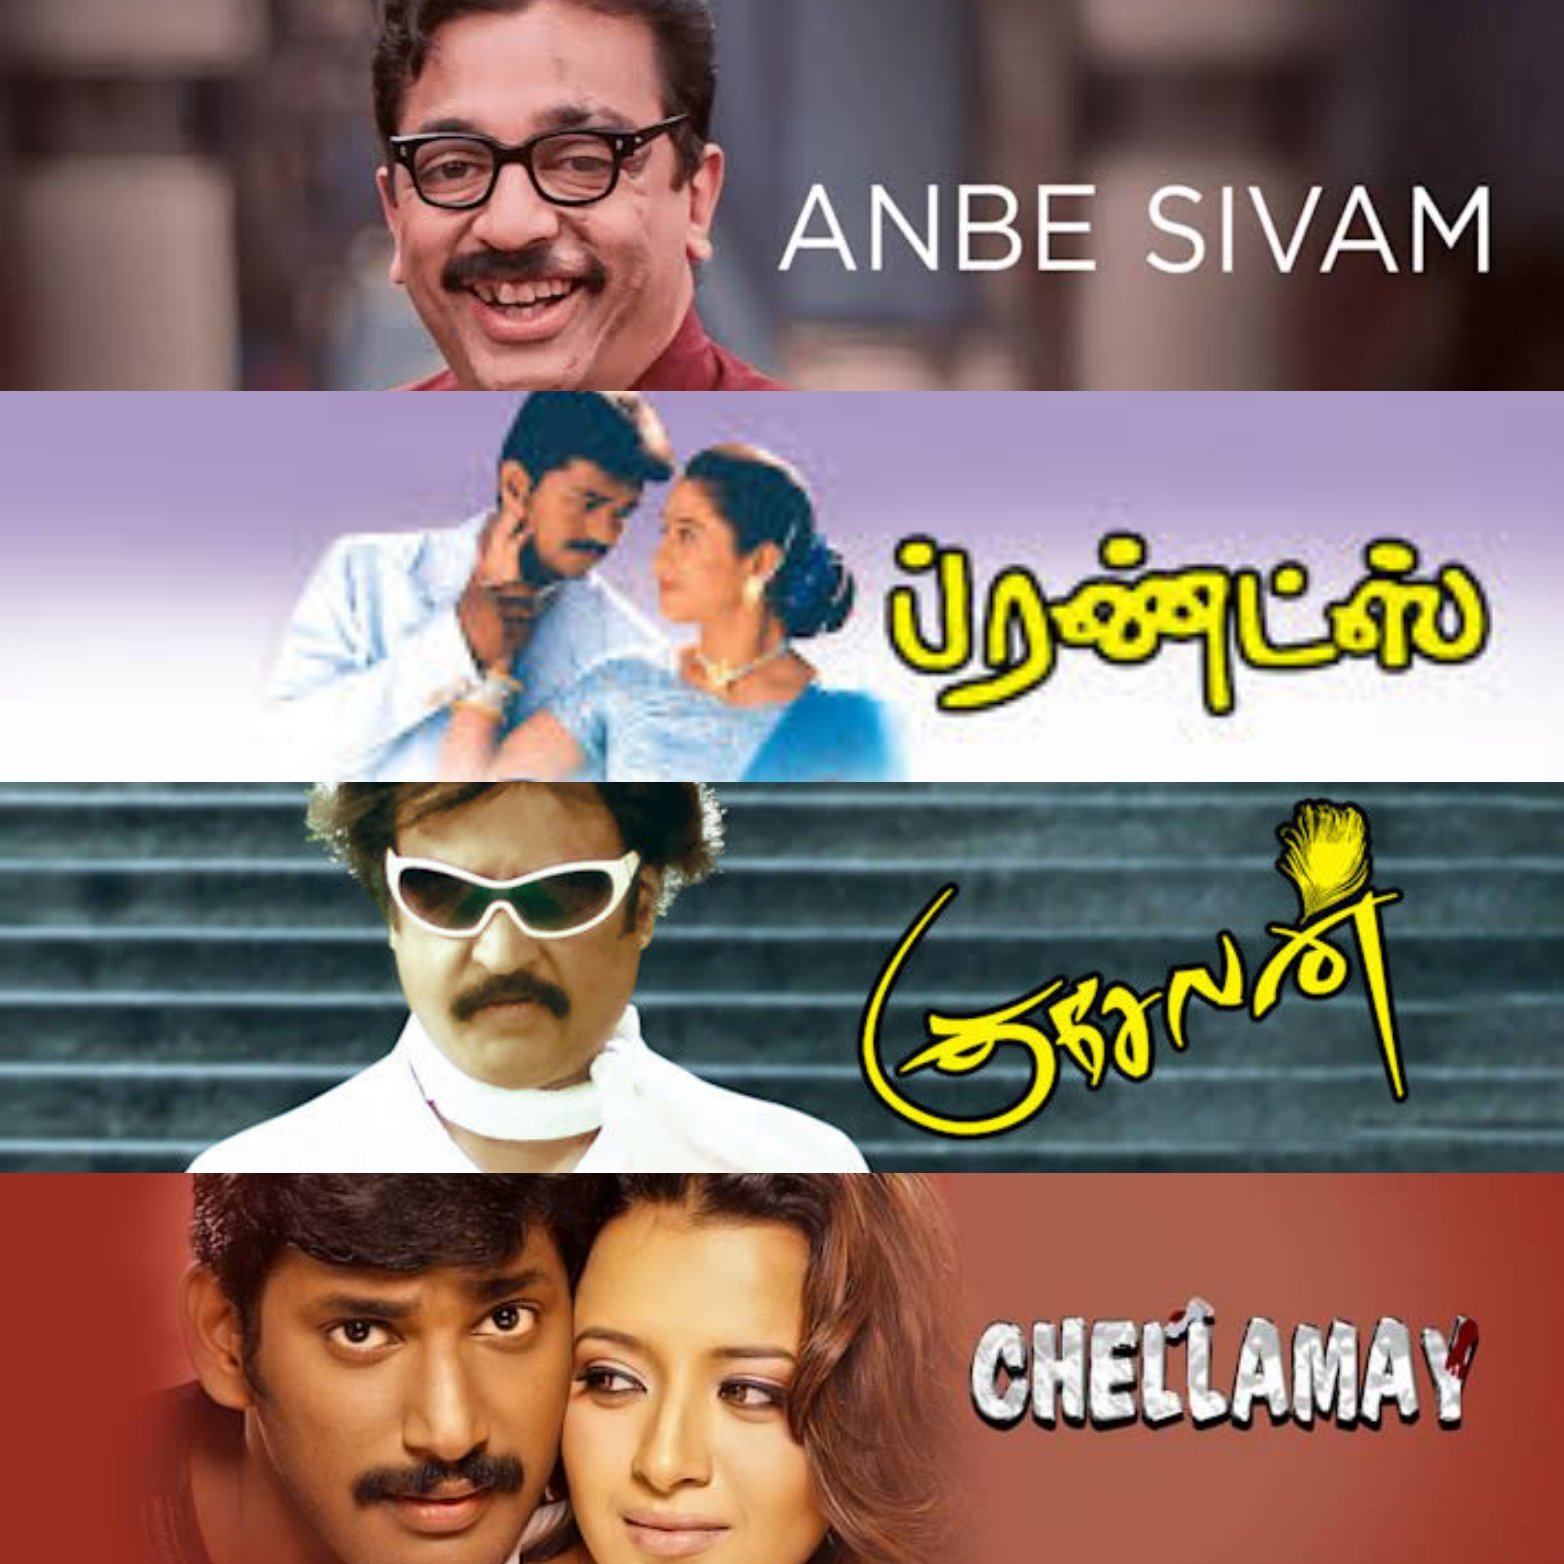 10 Feel-Good Tamil Films To Stream On Amazon Prime Video